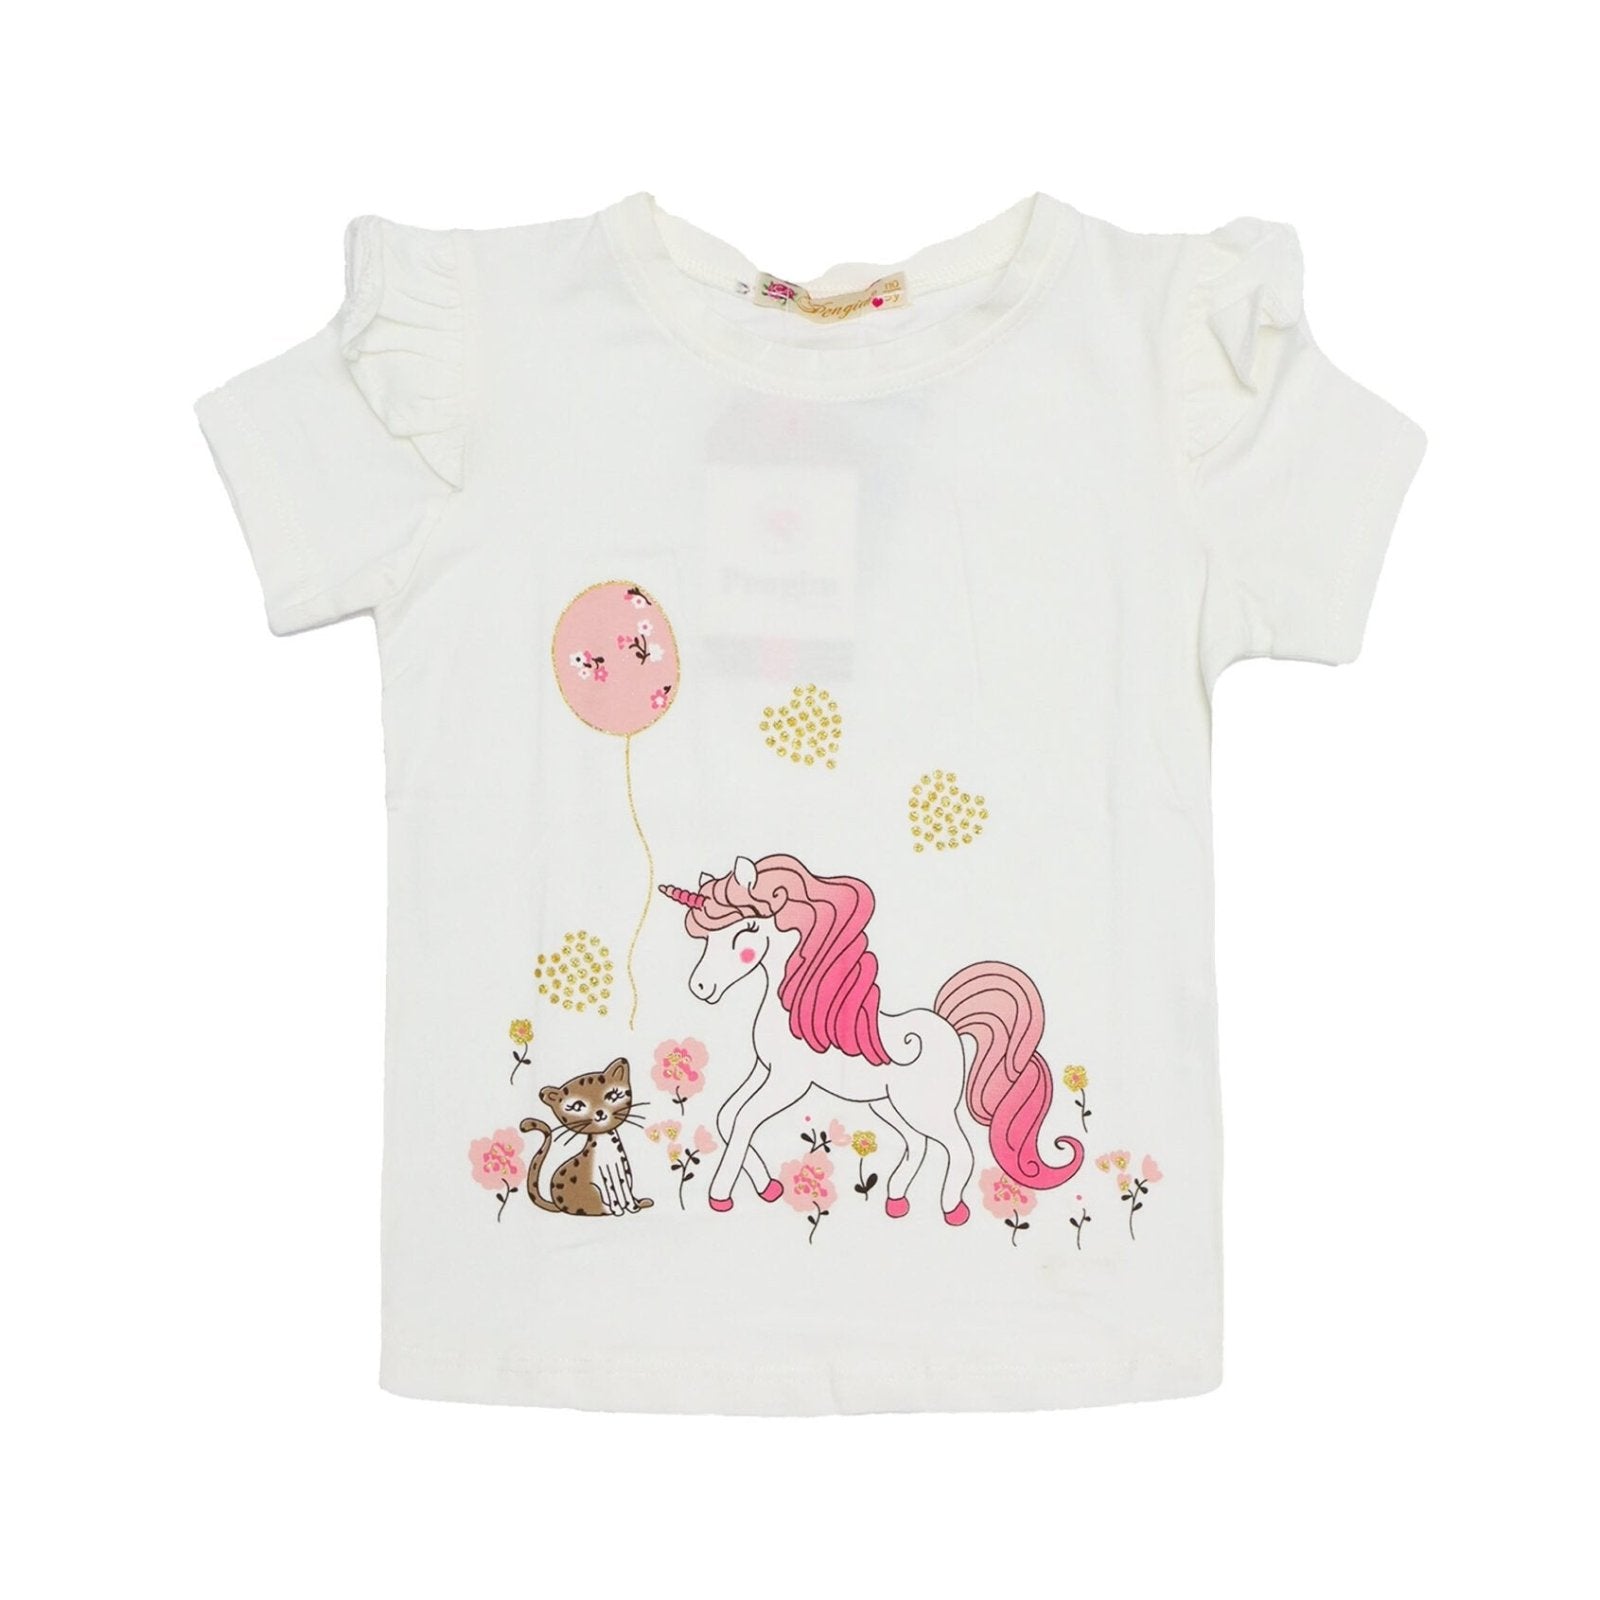 Girls Shirt Unicorn Print White Color | Made in Turkey - Zubaidas Mothershop